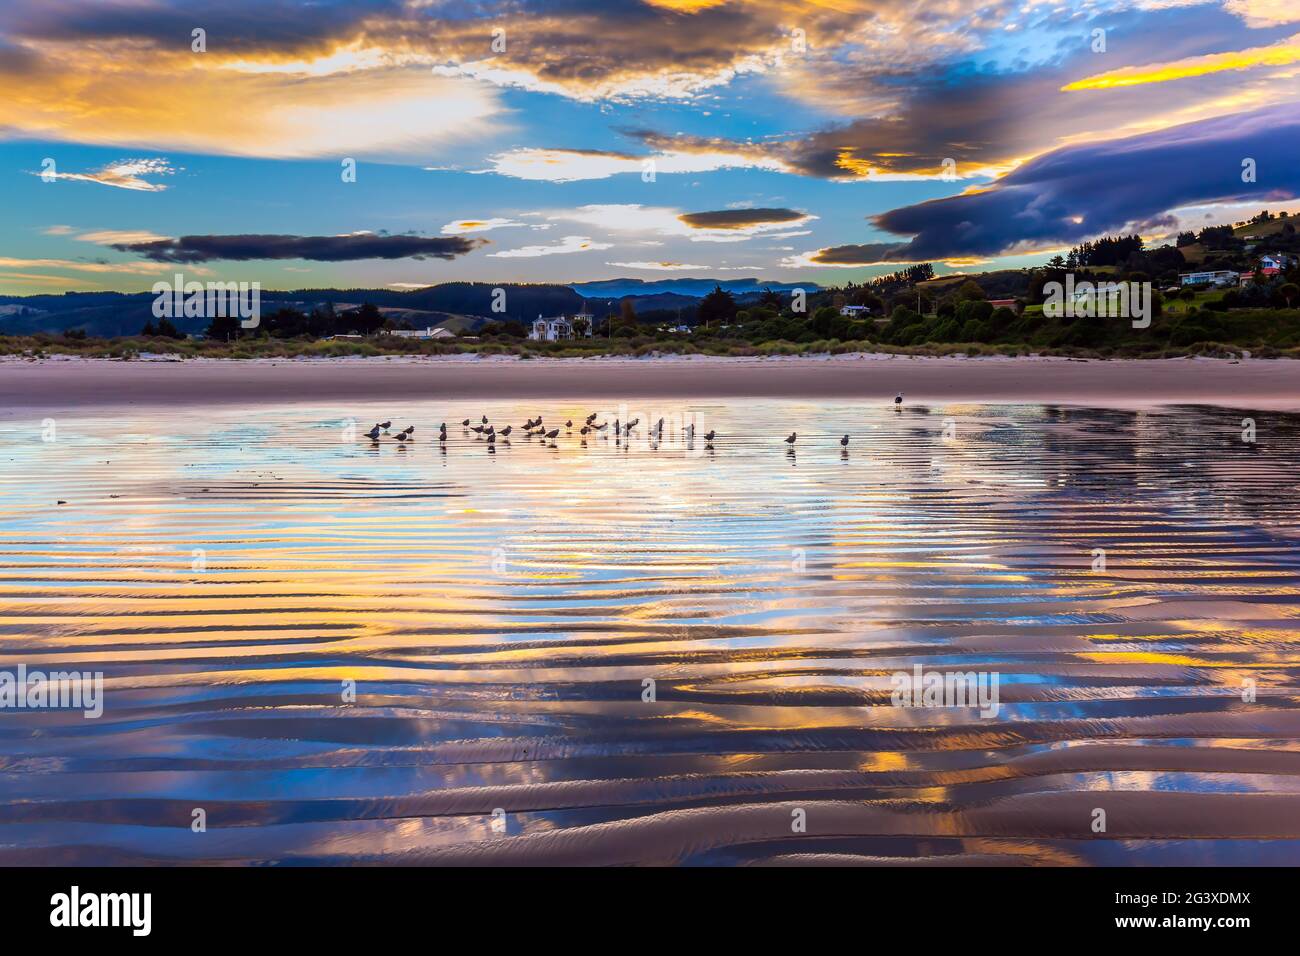 Flock of birds resting near the shore Stock Photo